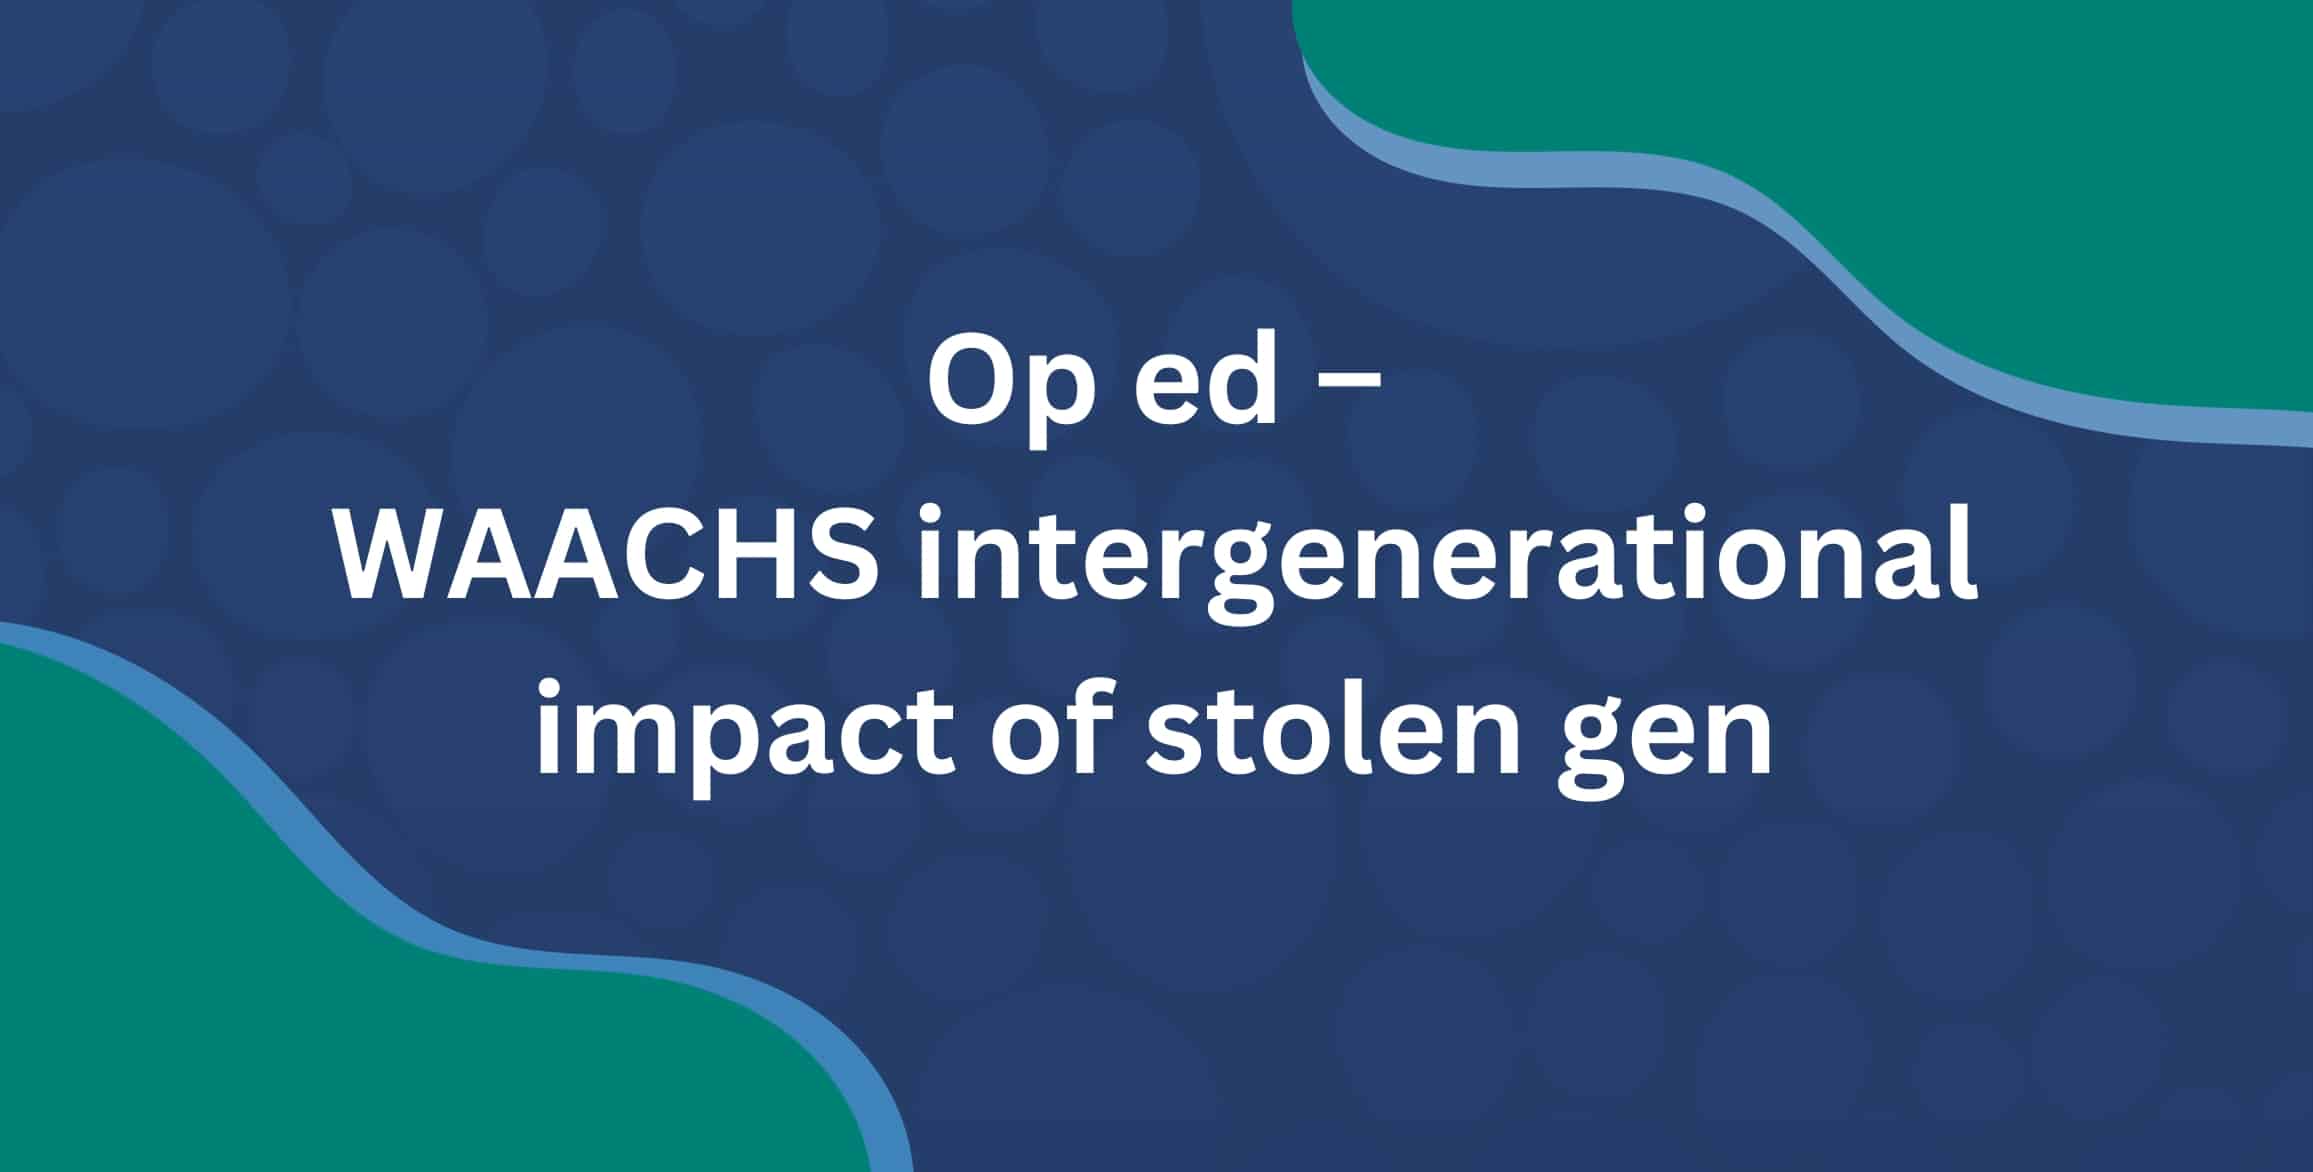 Op-ed - WAACHS intergenerational impact of stolen gen